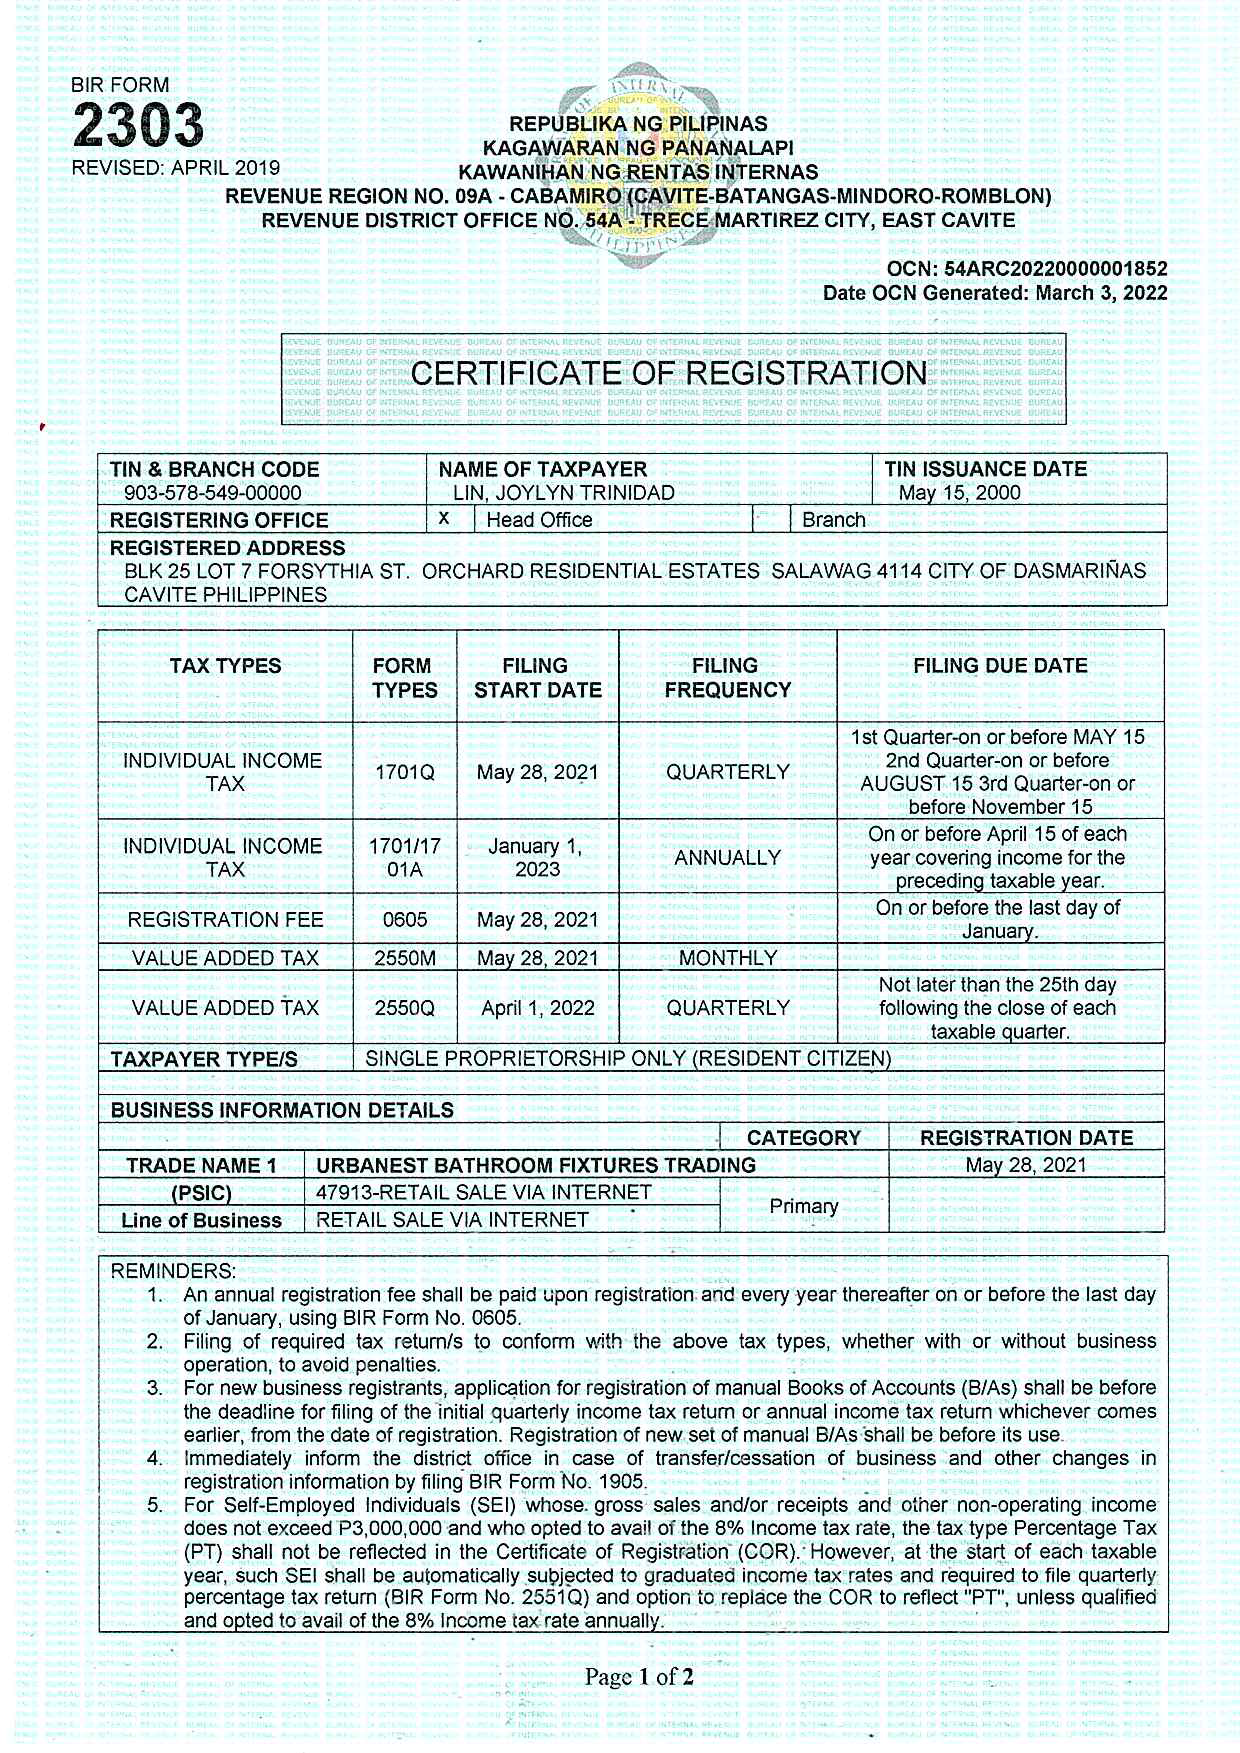 Certificate of Registration (BIR 2303)